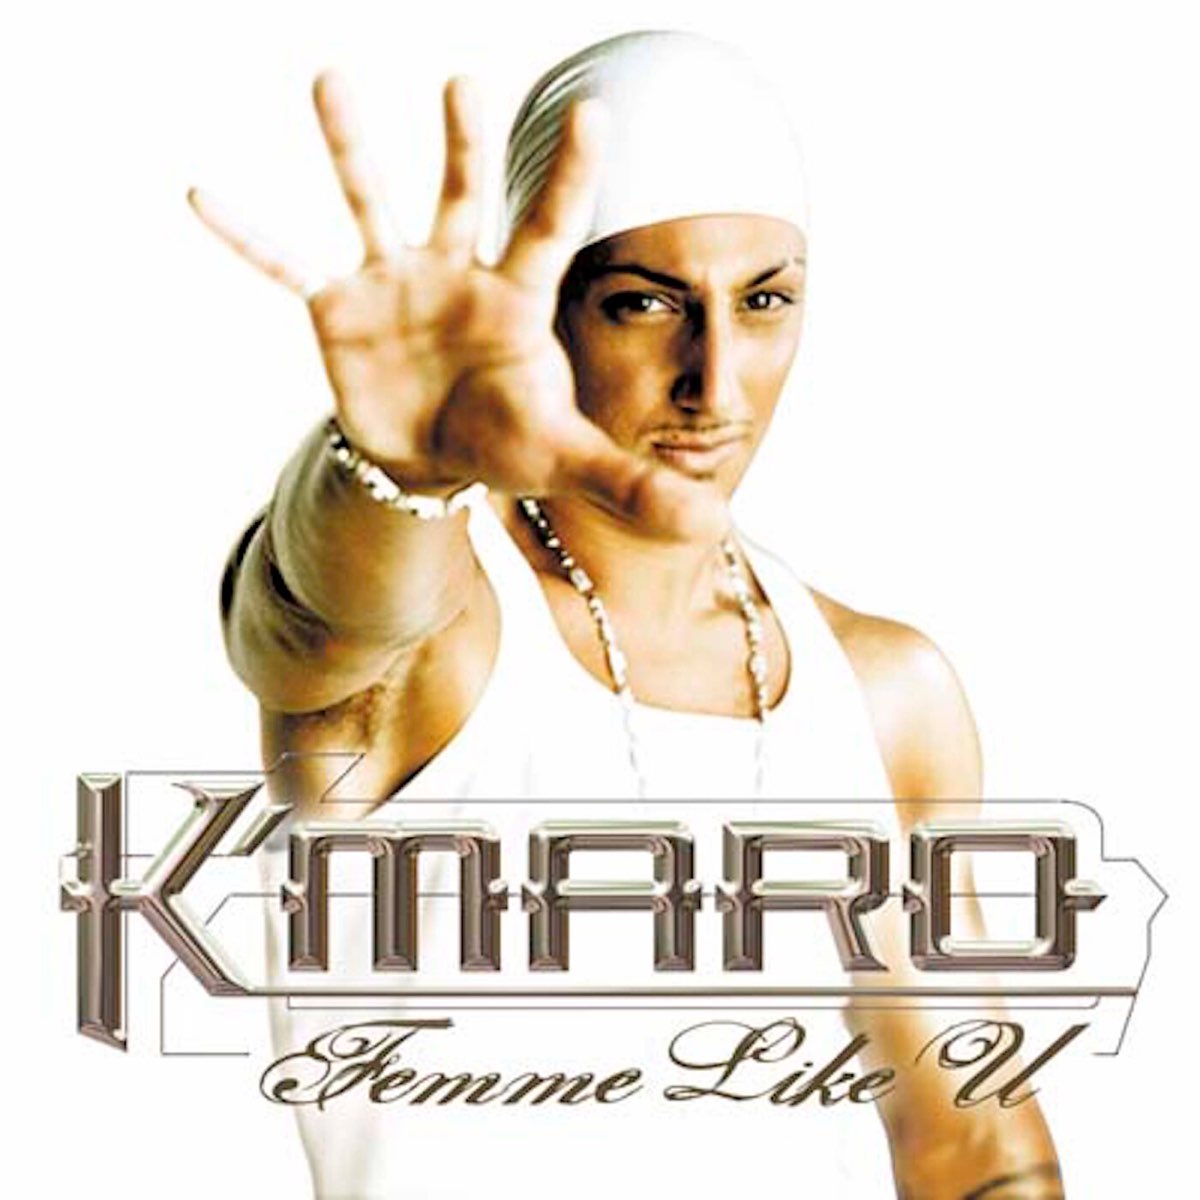 K maro like you. K Maro 2022. K-Maro с женой. K-Maro - femme like u. K-Maro альбомы.